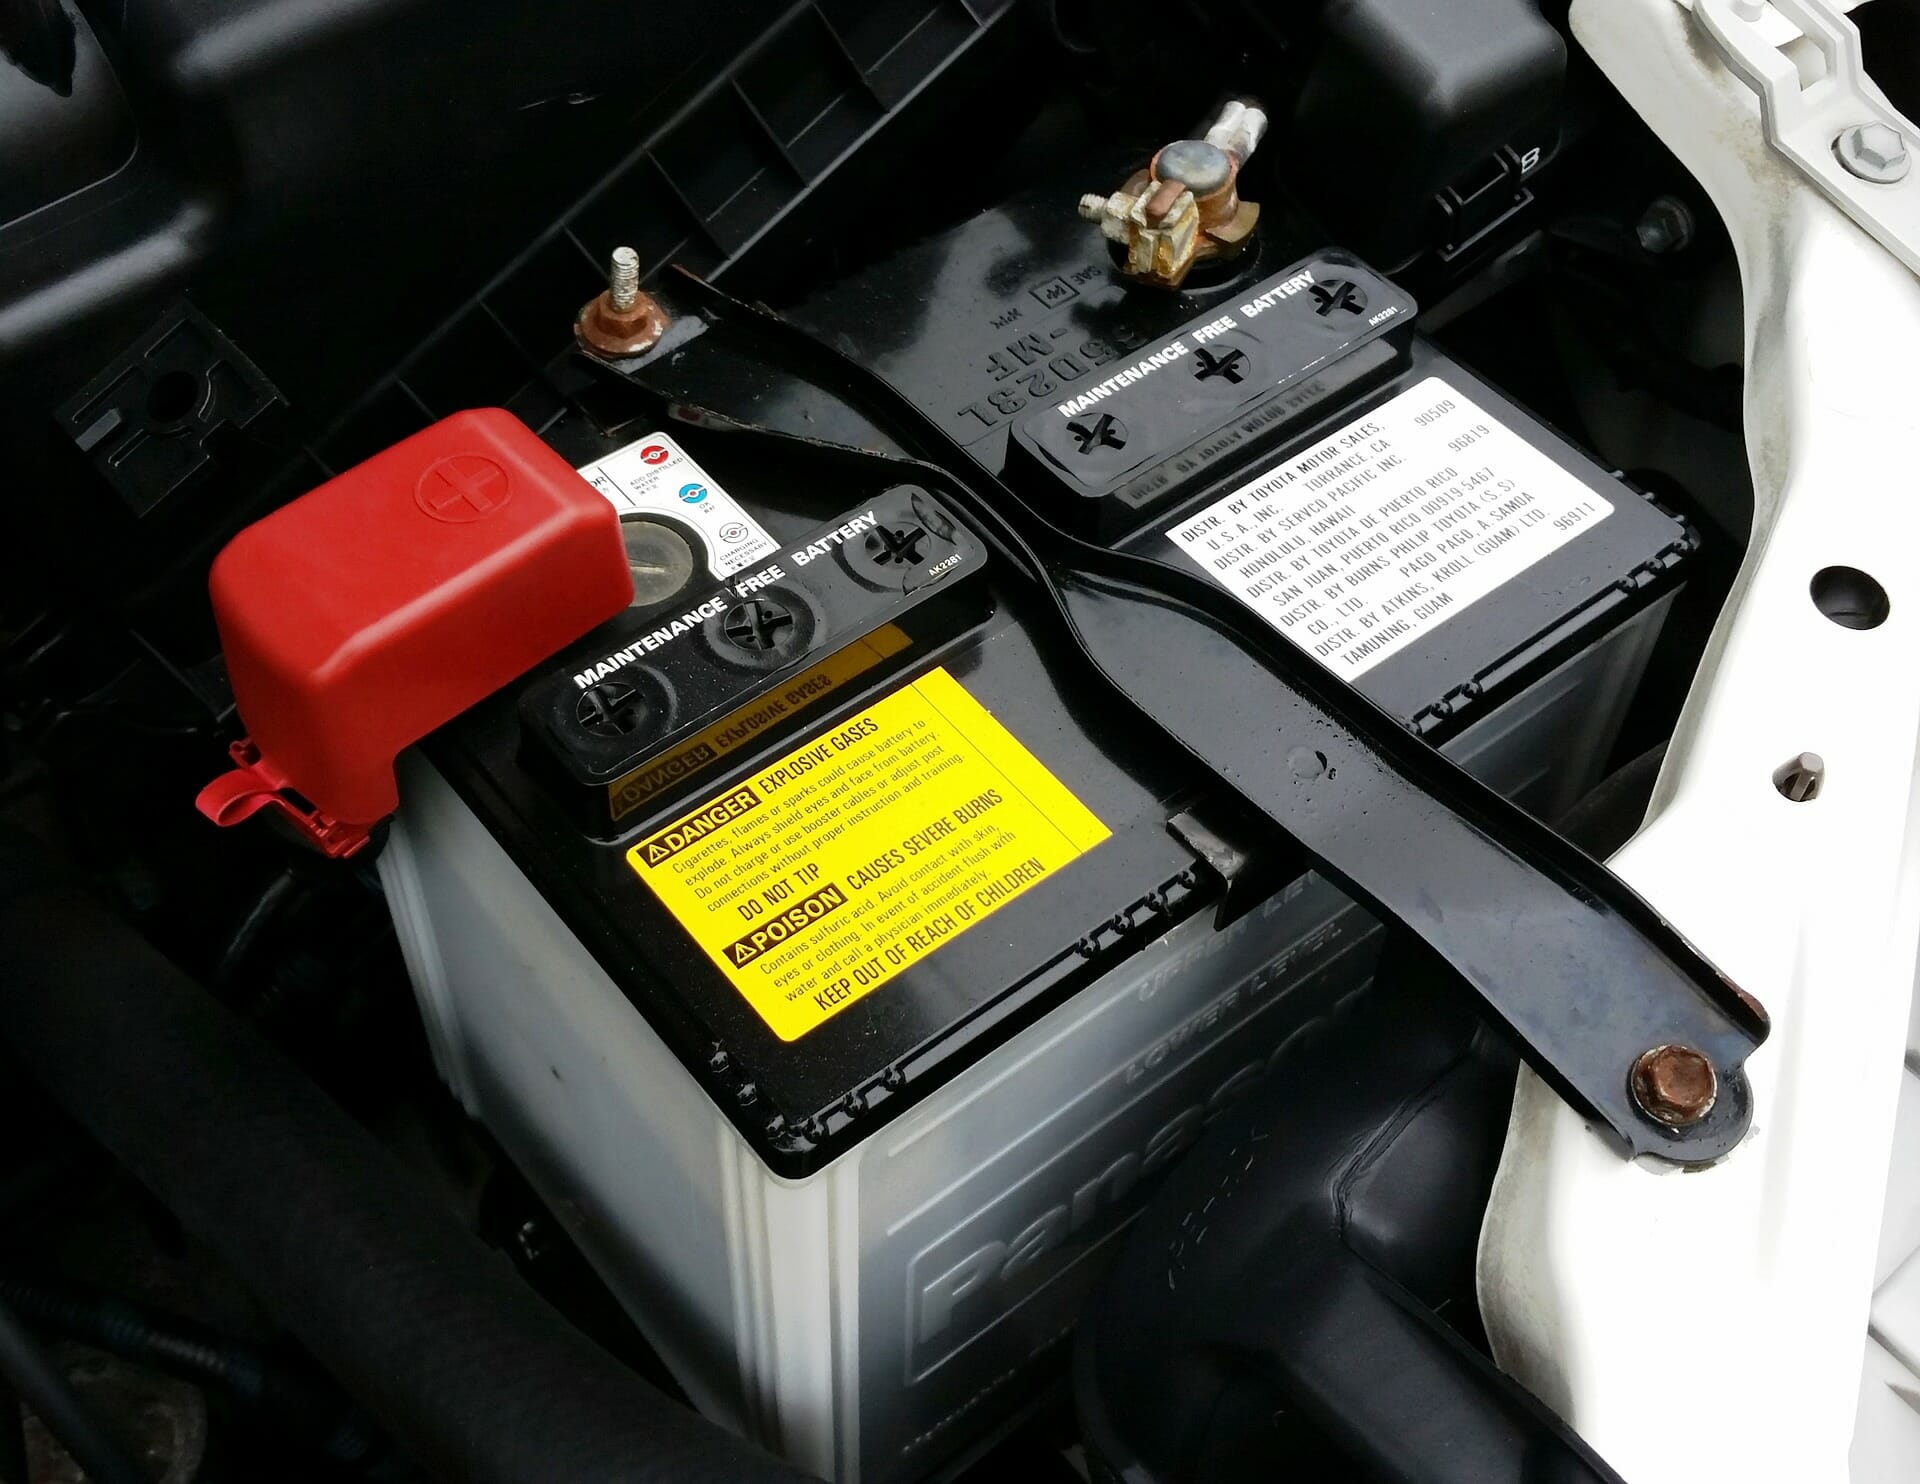 Ford Fusion battery Lebanon, VA